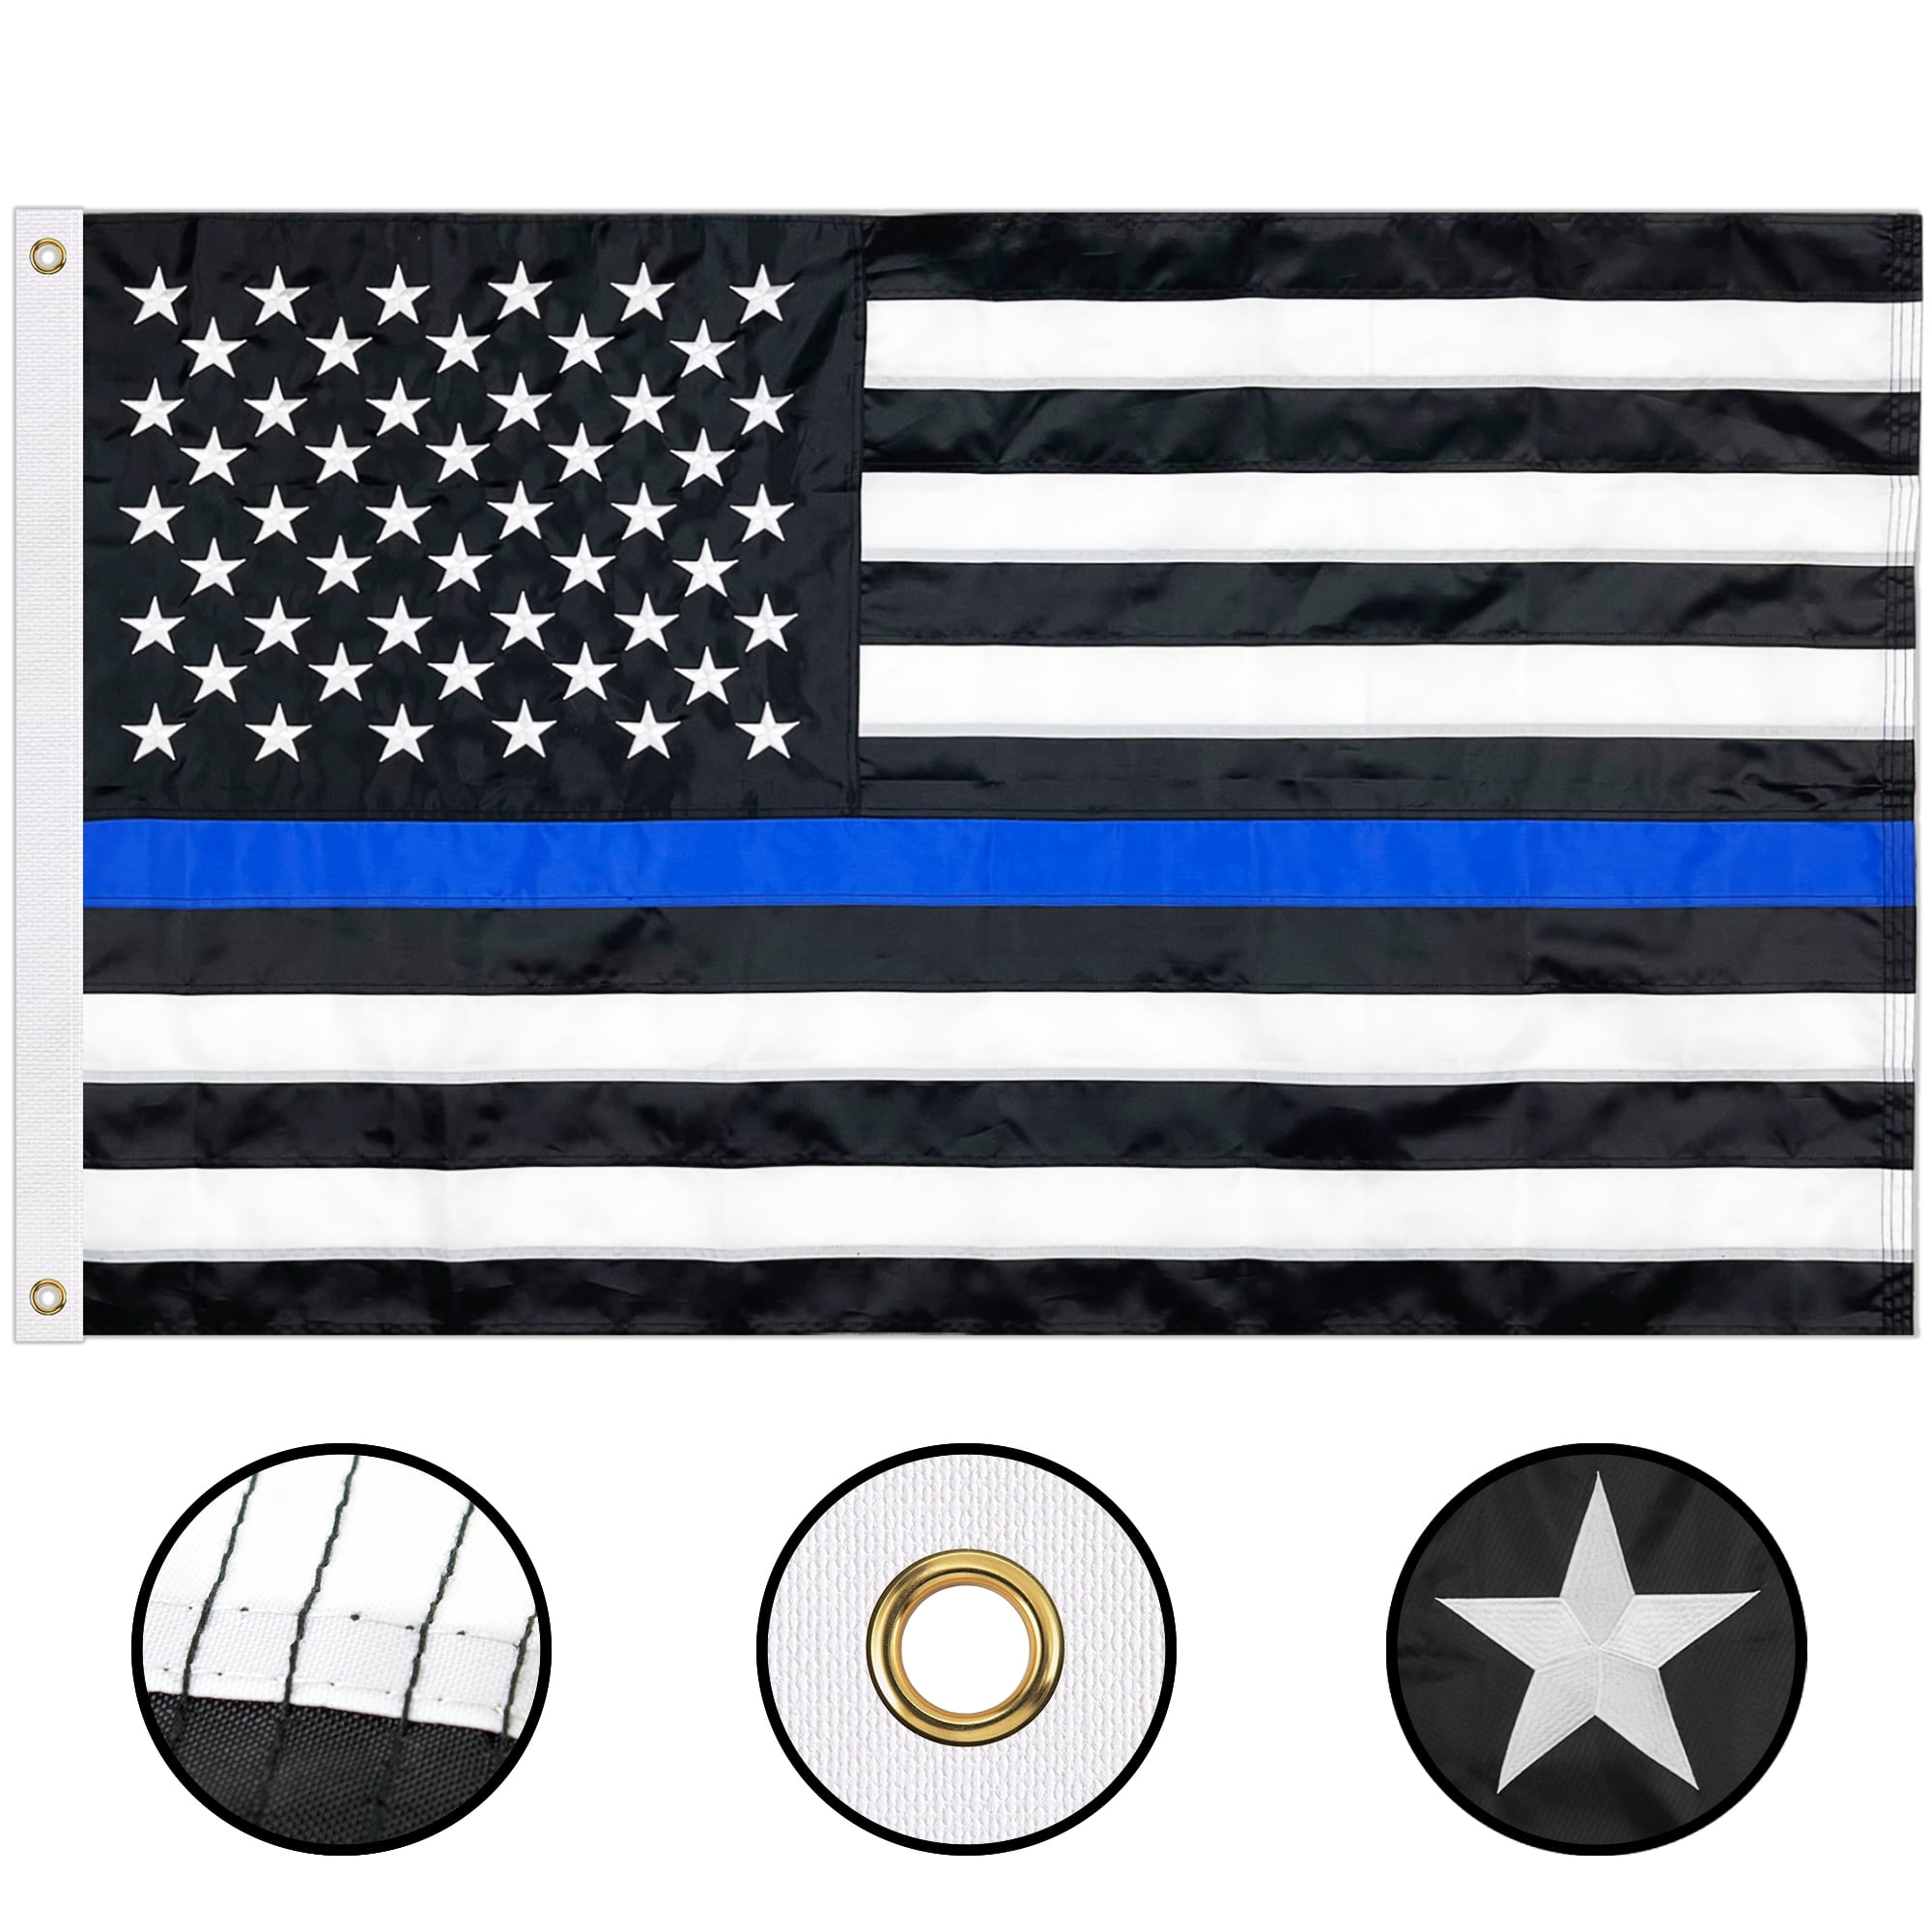 3x5 Gadsden Flag Flags USA 2 PACK Wholesale Lot 3x5 Police Thin Blue line Flag 